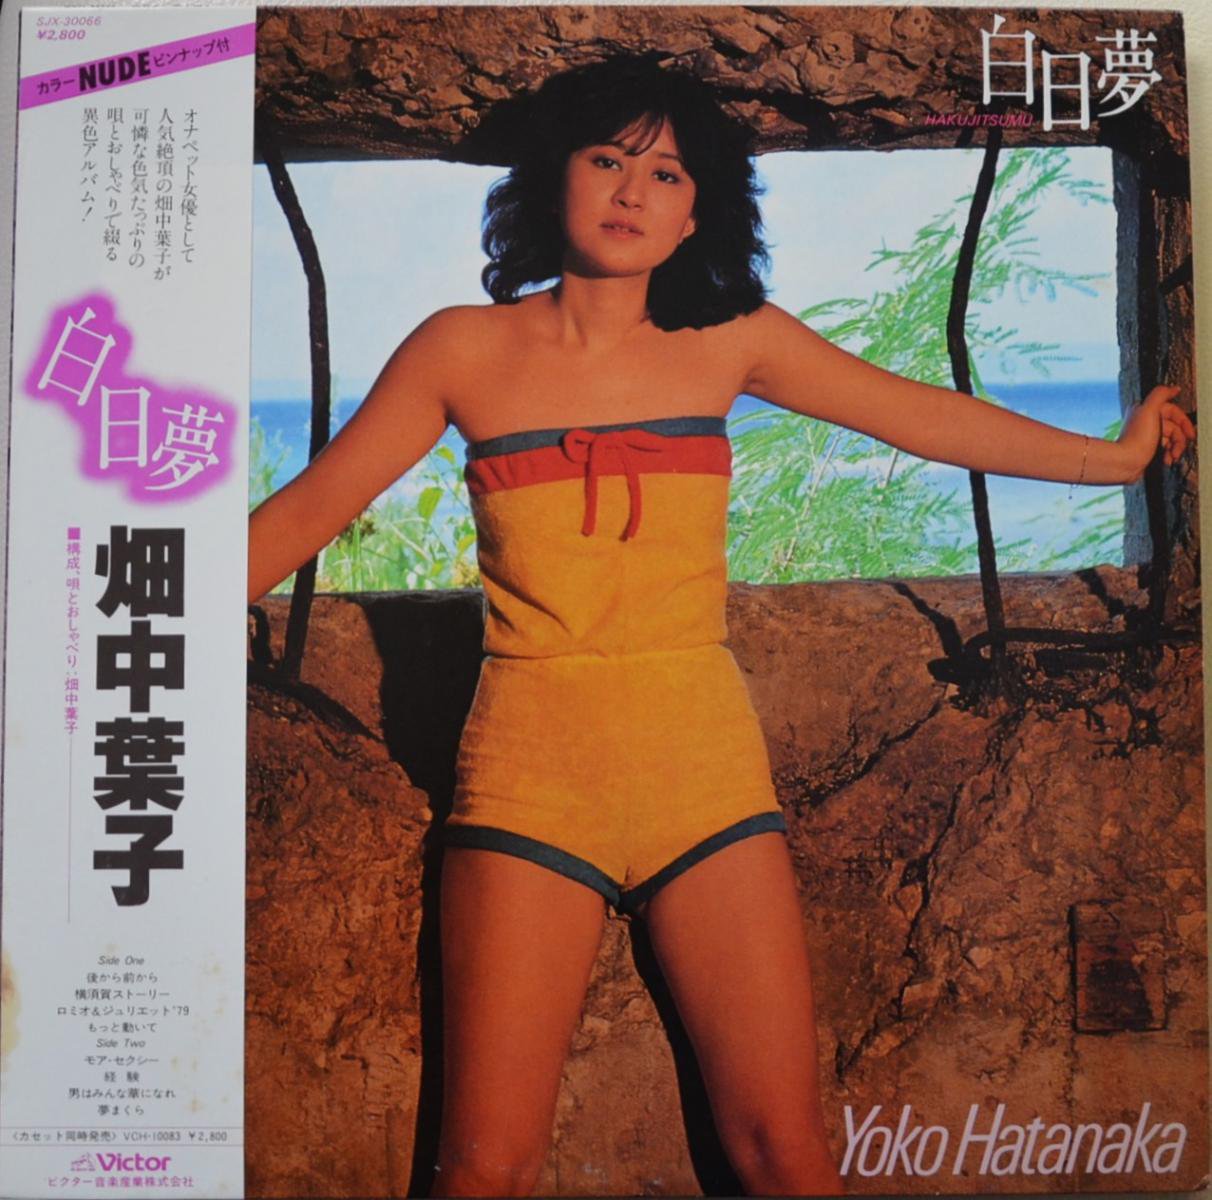 畑中葉子 Yoko Hatanaka 白日夢 Hakujitsumu Lp Hip Tank Records